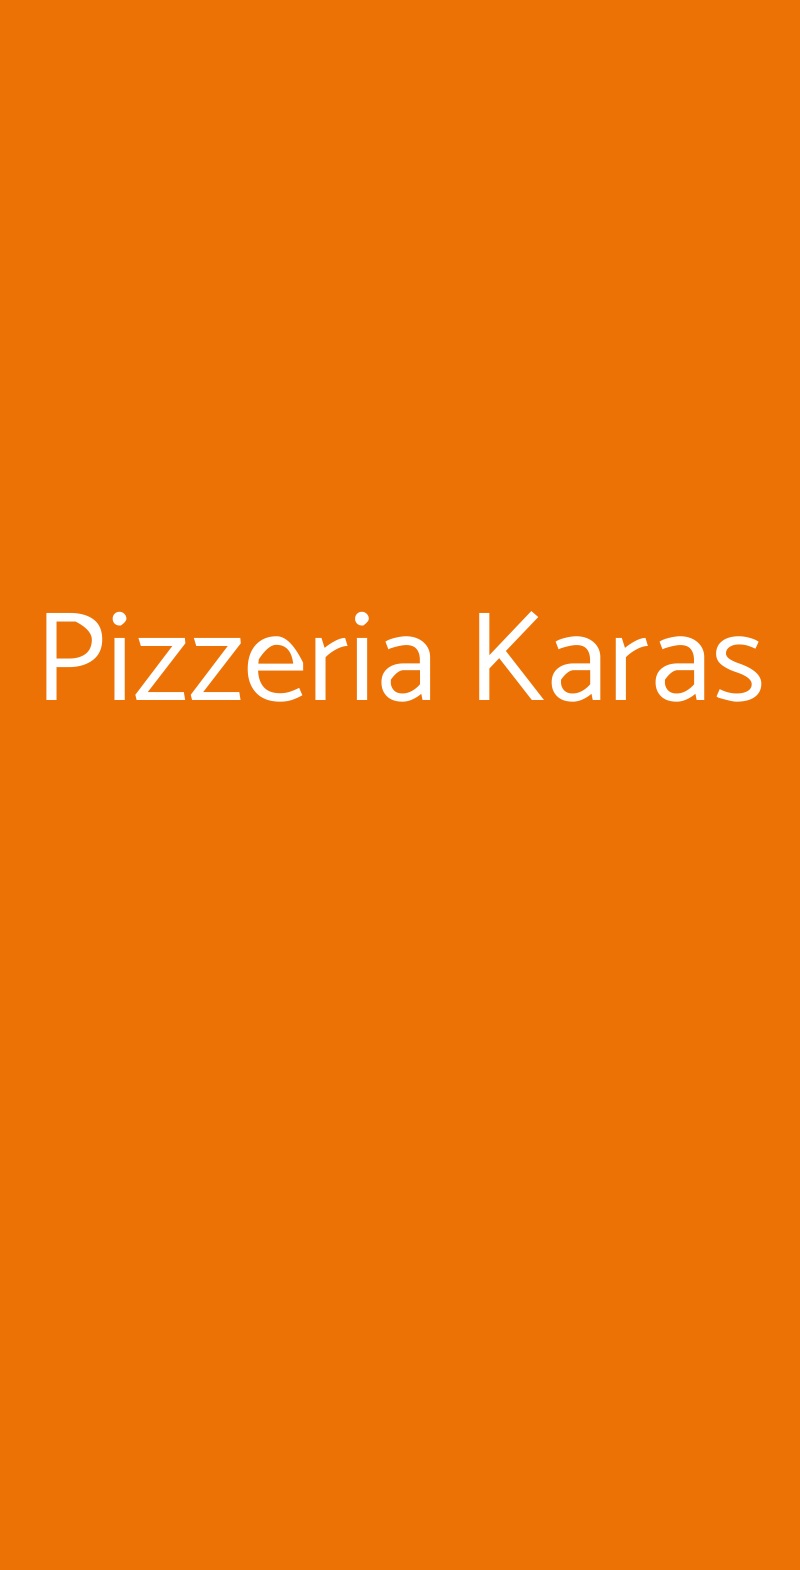 Pizzeria Karas Milano menù 1 pagina